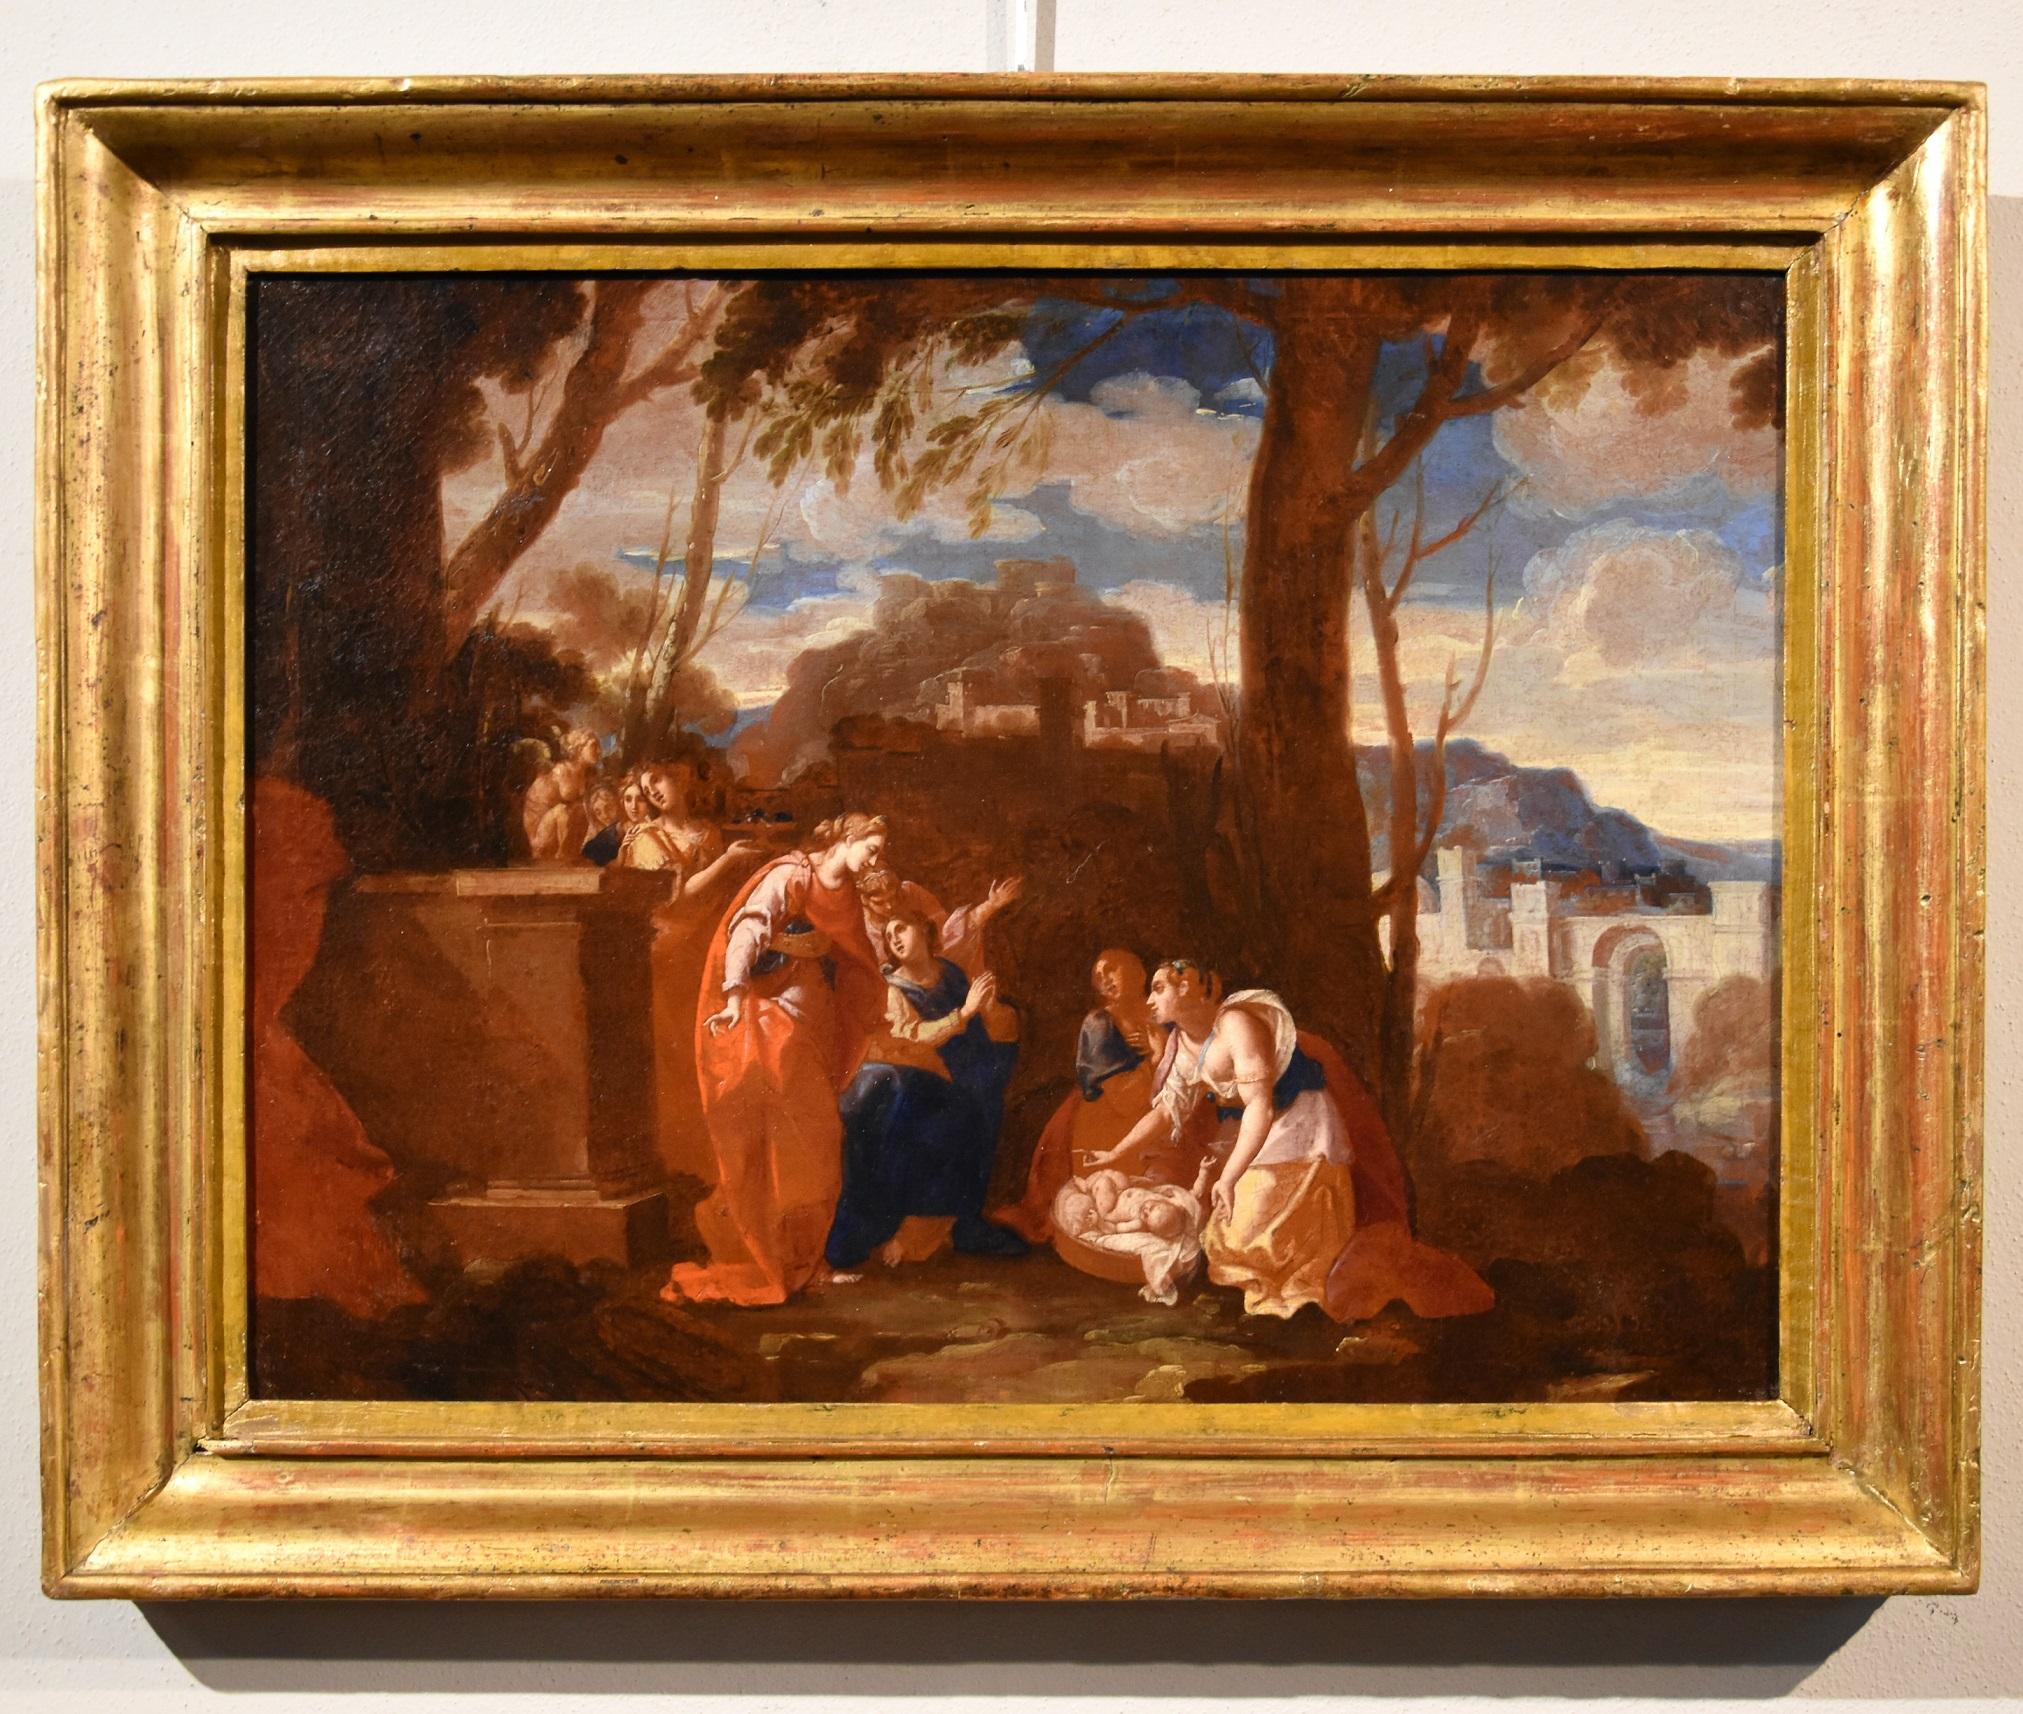 Poussin Moses Landschaft Alter Meister Öl auf Leinwand Gemälde 17. Jahrhundert Italien Kunst (Alte Meister), Painting, von Nicolas Poussin (Les Andelys 1594 - Rome 1665) 